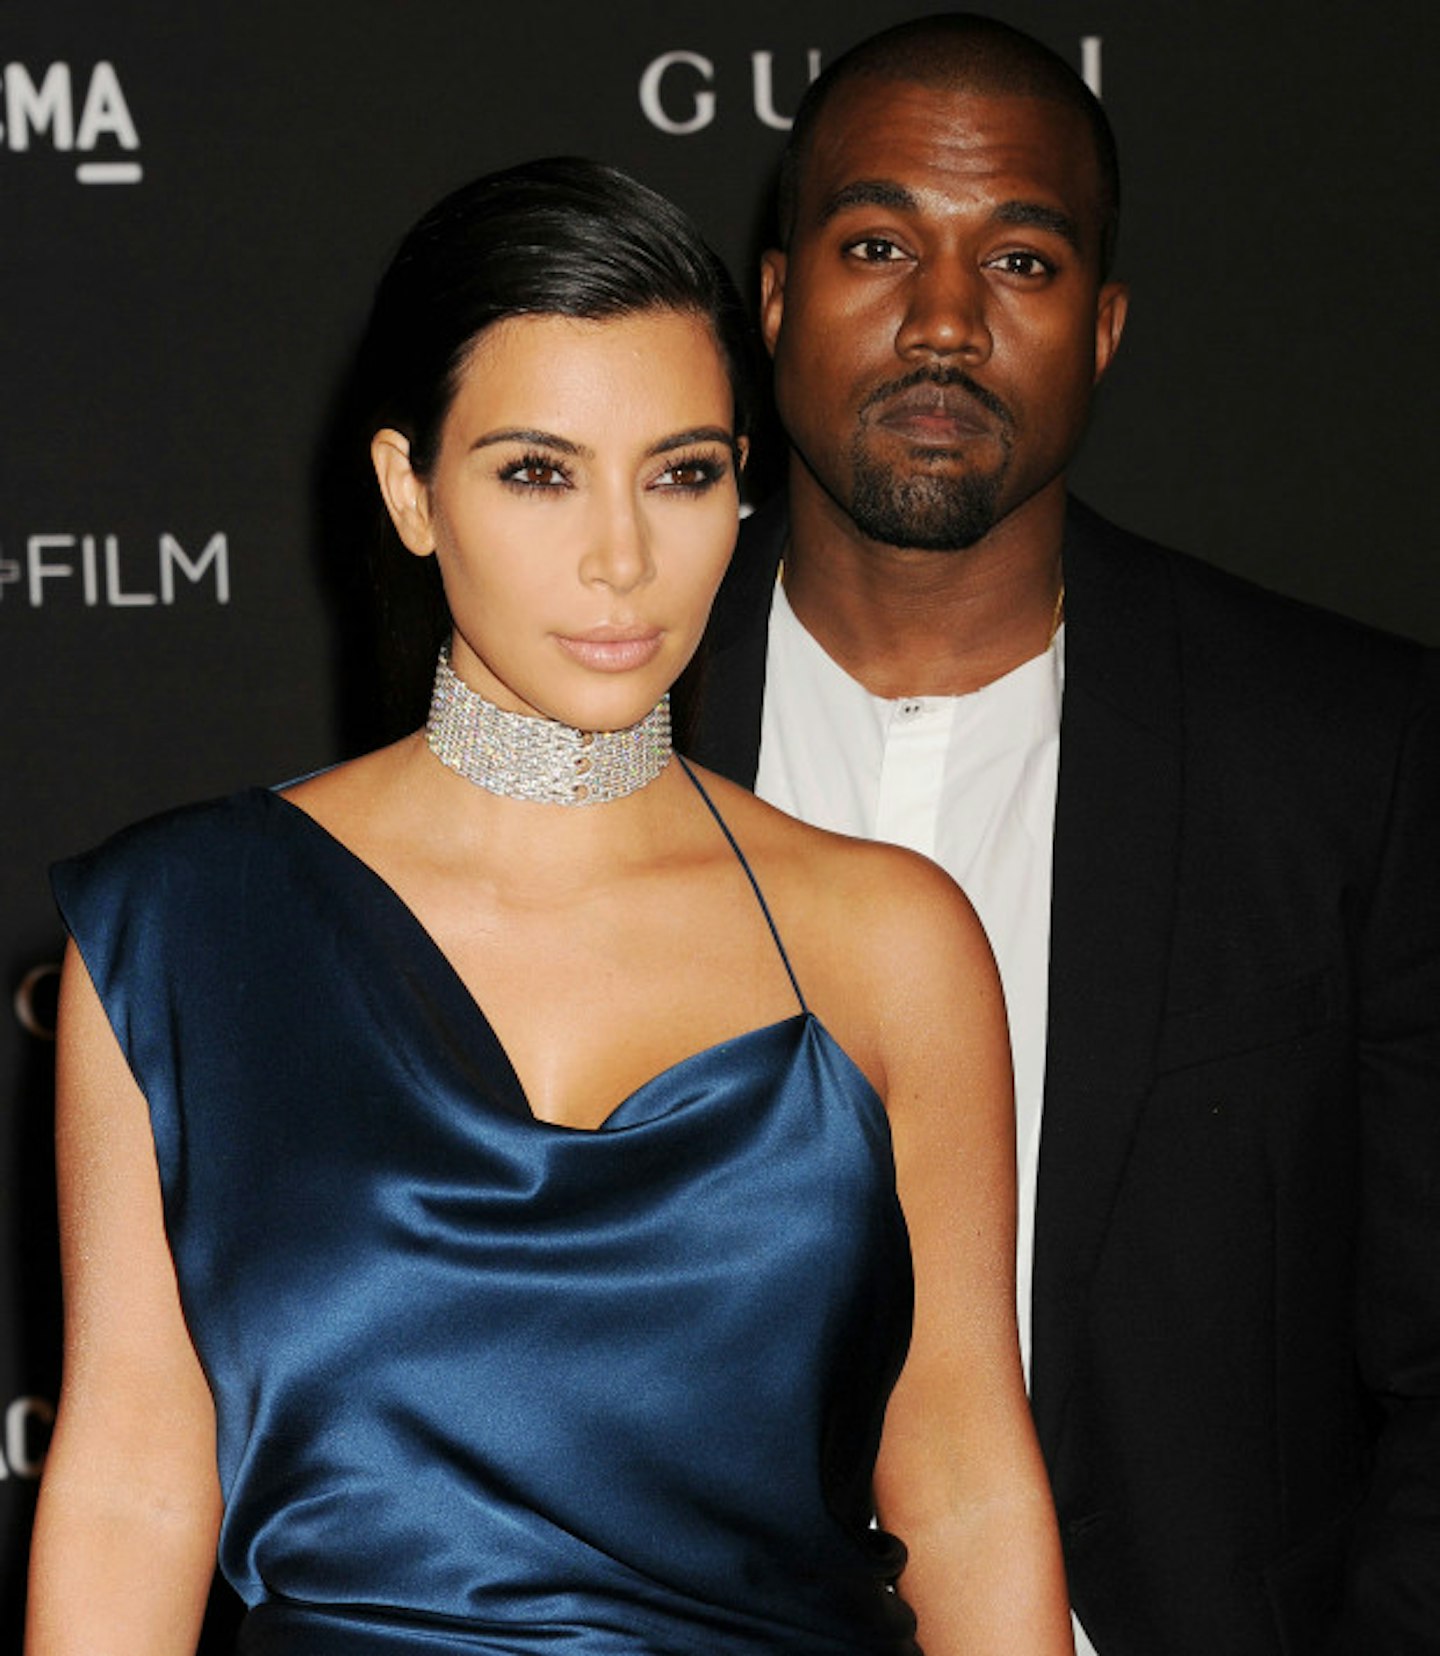 Kanye West up all night sorting through wife Kim Kardashian's